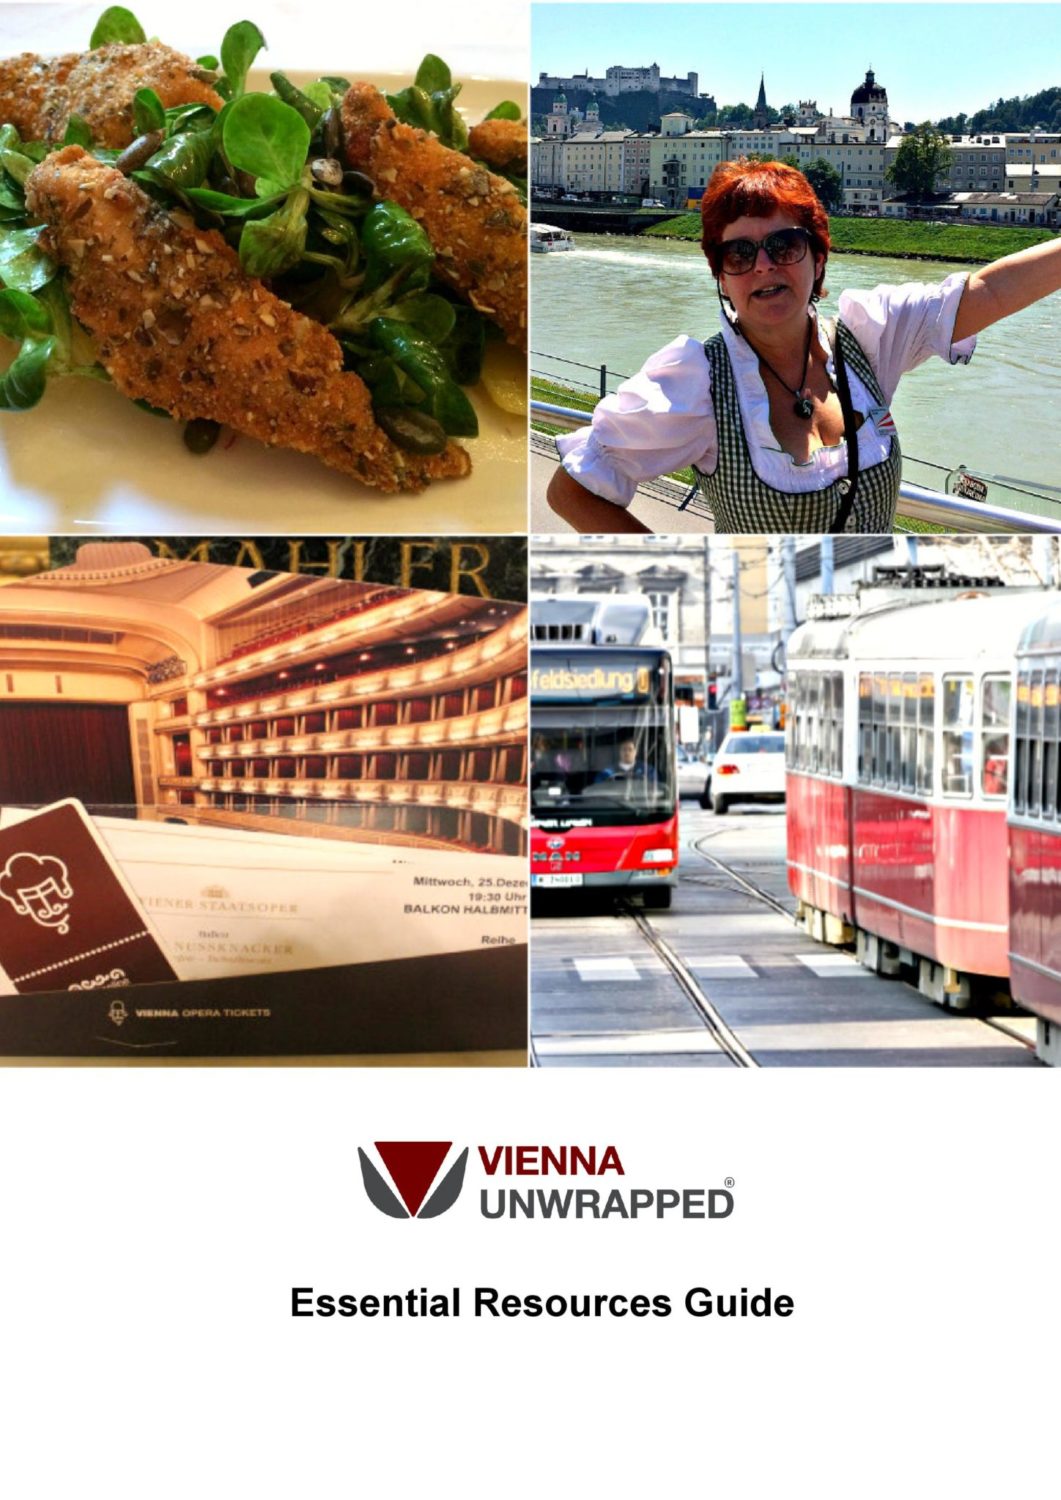 Vienna City Guide PDF: Essential Resources Guide